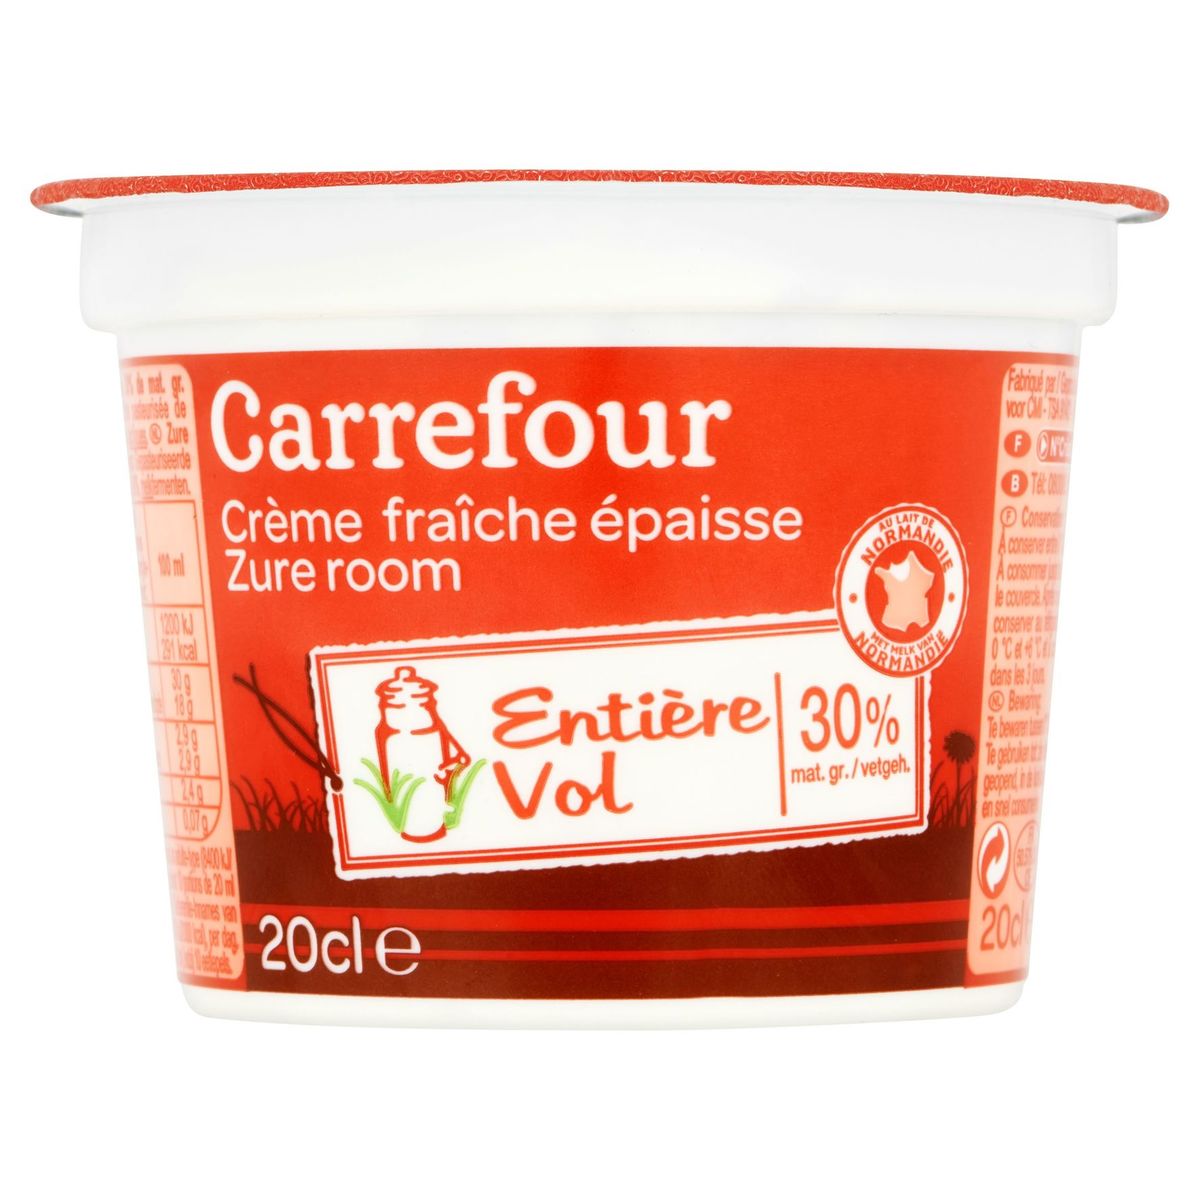 Carrefour Zure Room Vol 20 cl